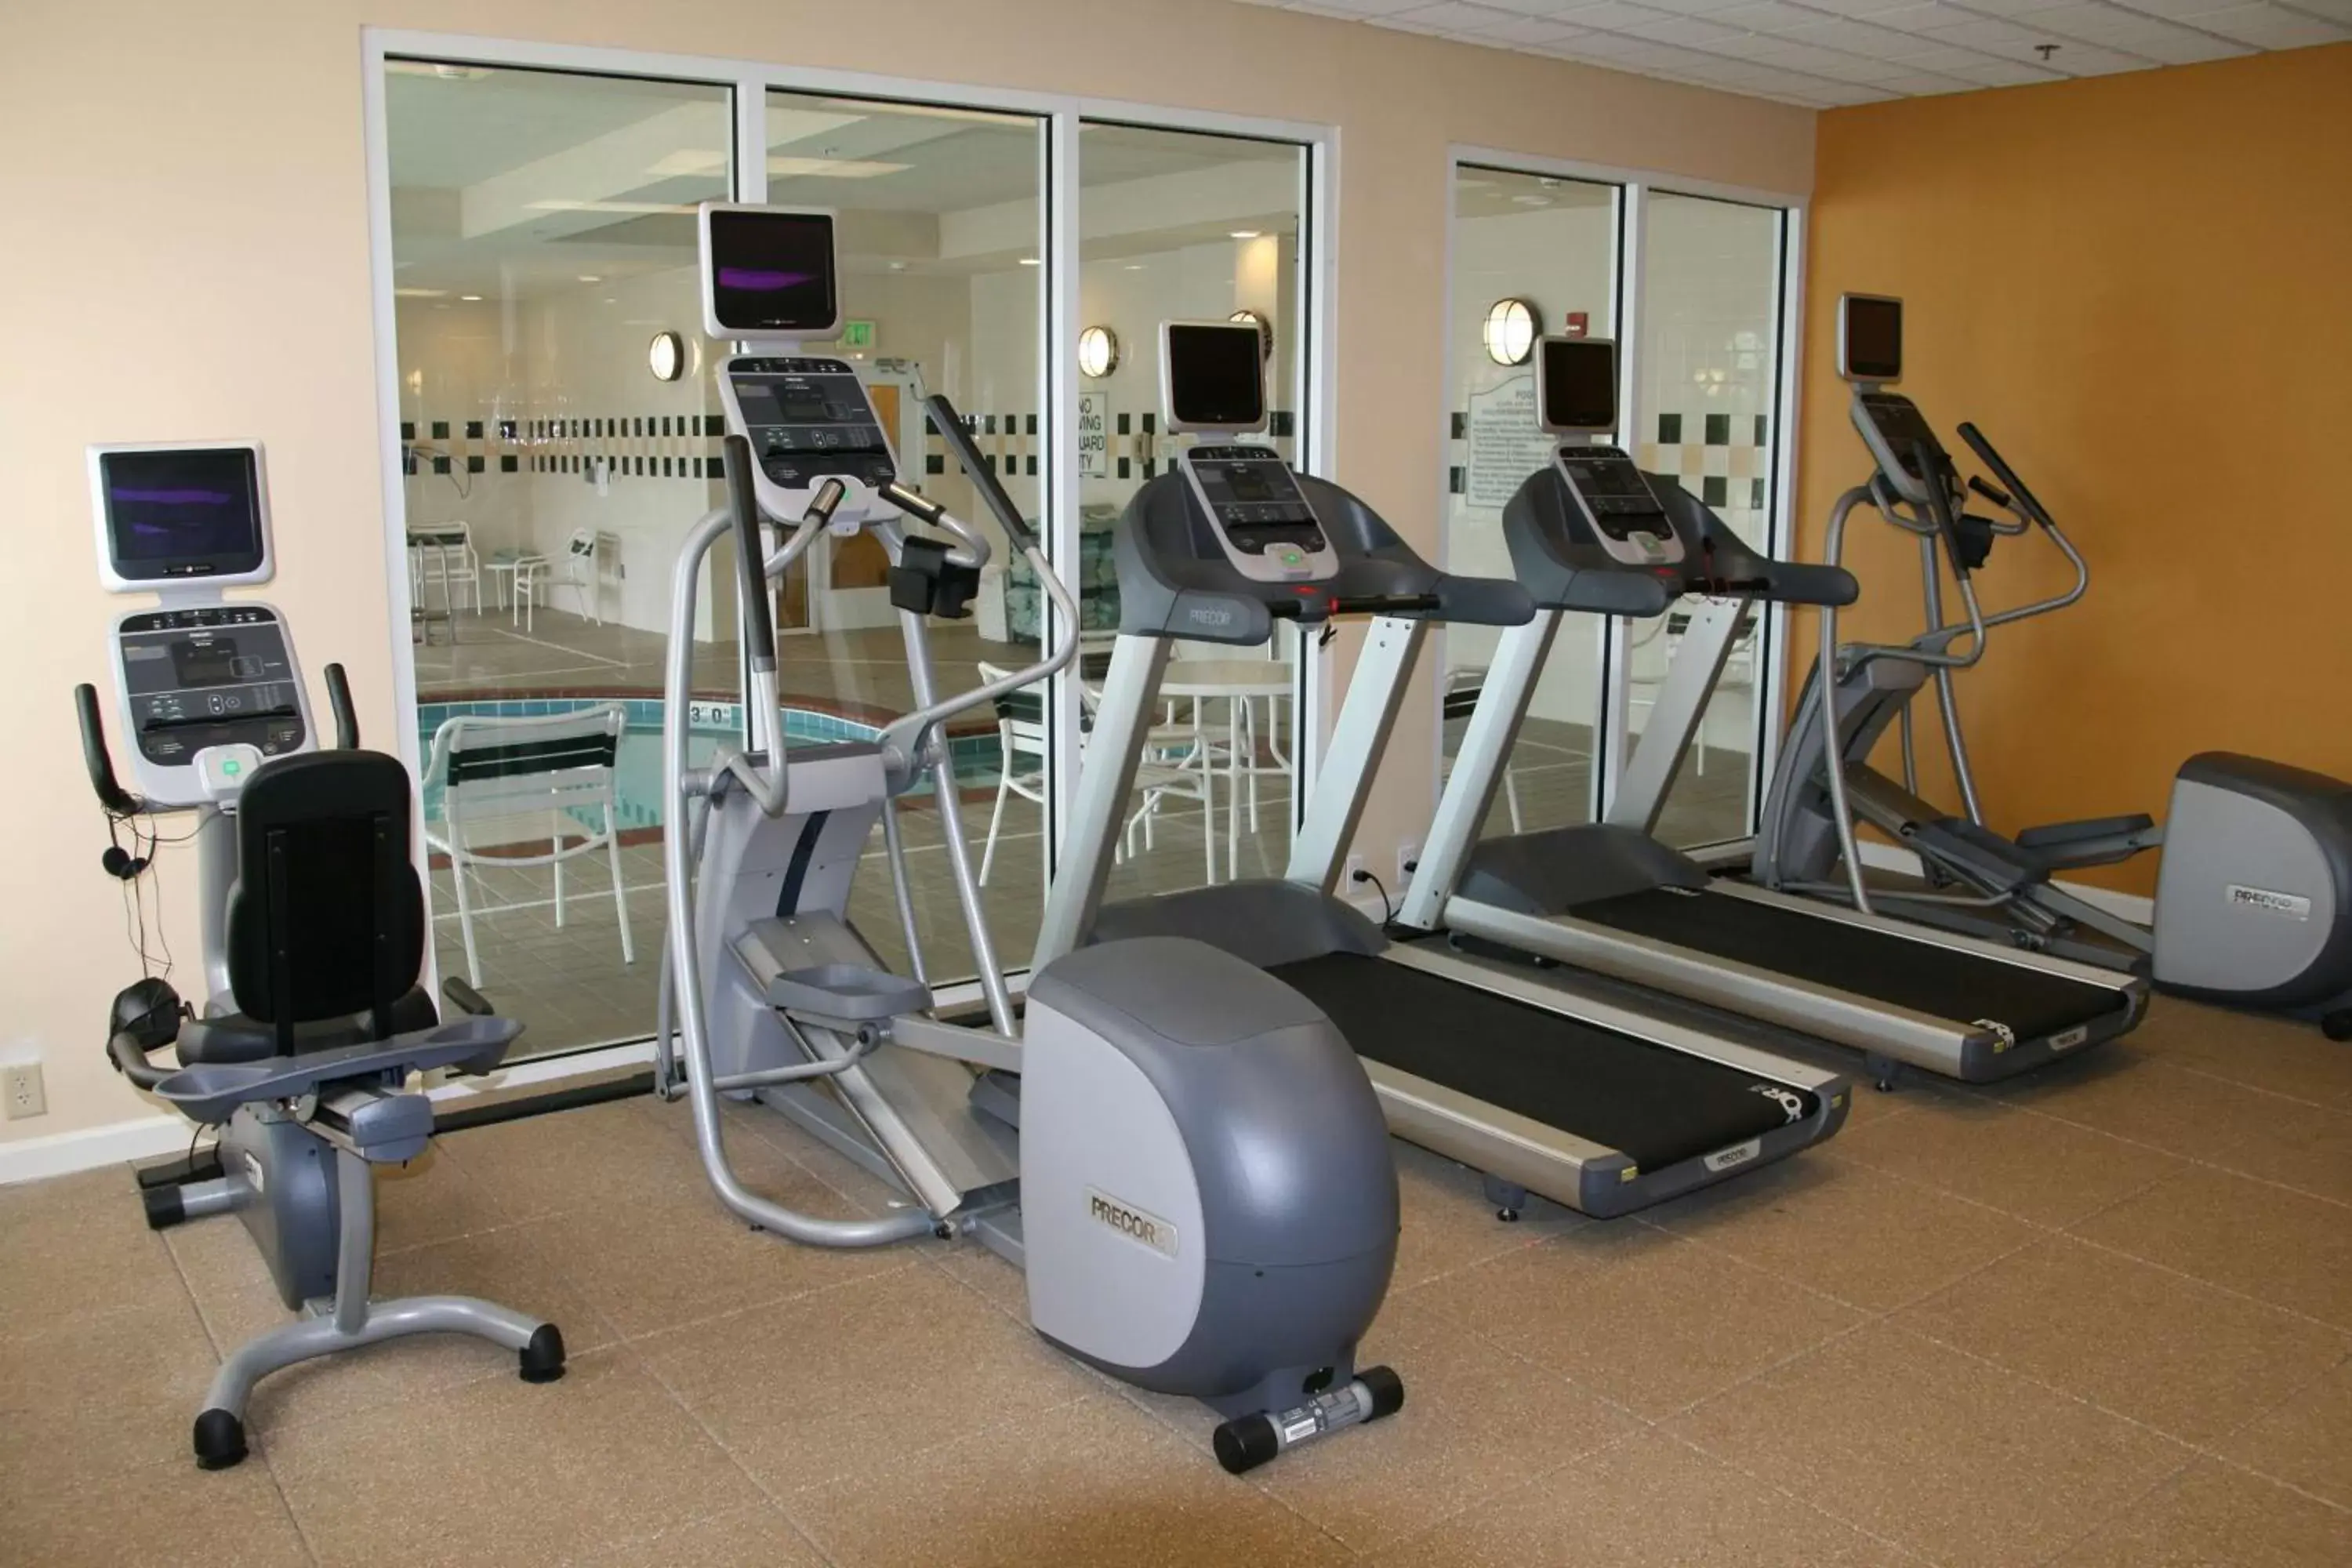 Fitness centre/facilities, Fitness Center/Facilities in Hilton Garden Inn Newport News